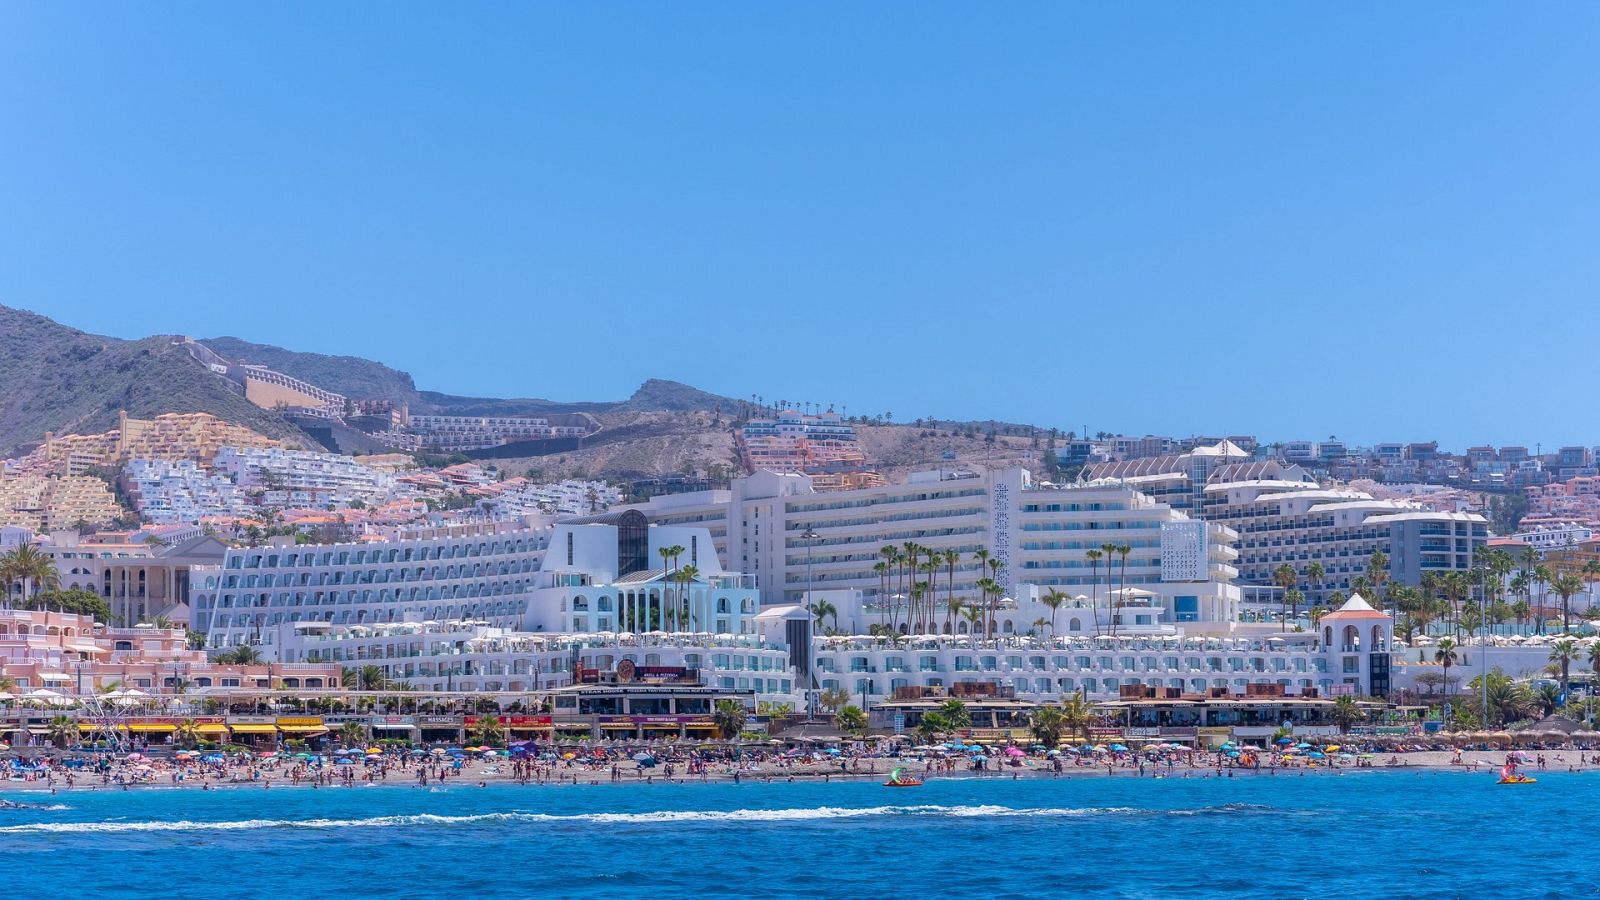 Hoteles en la costa de Adeje en Tenerife